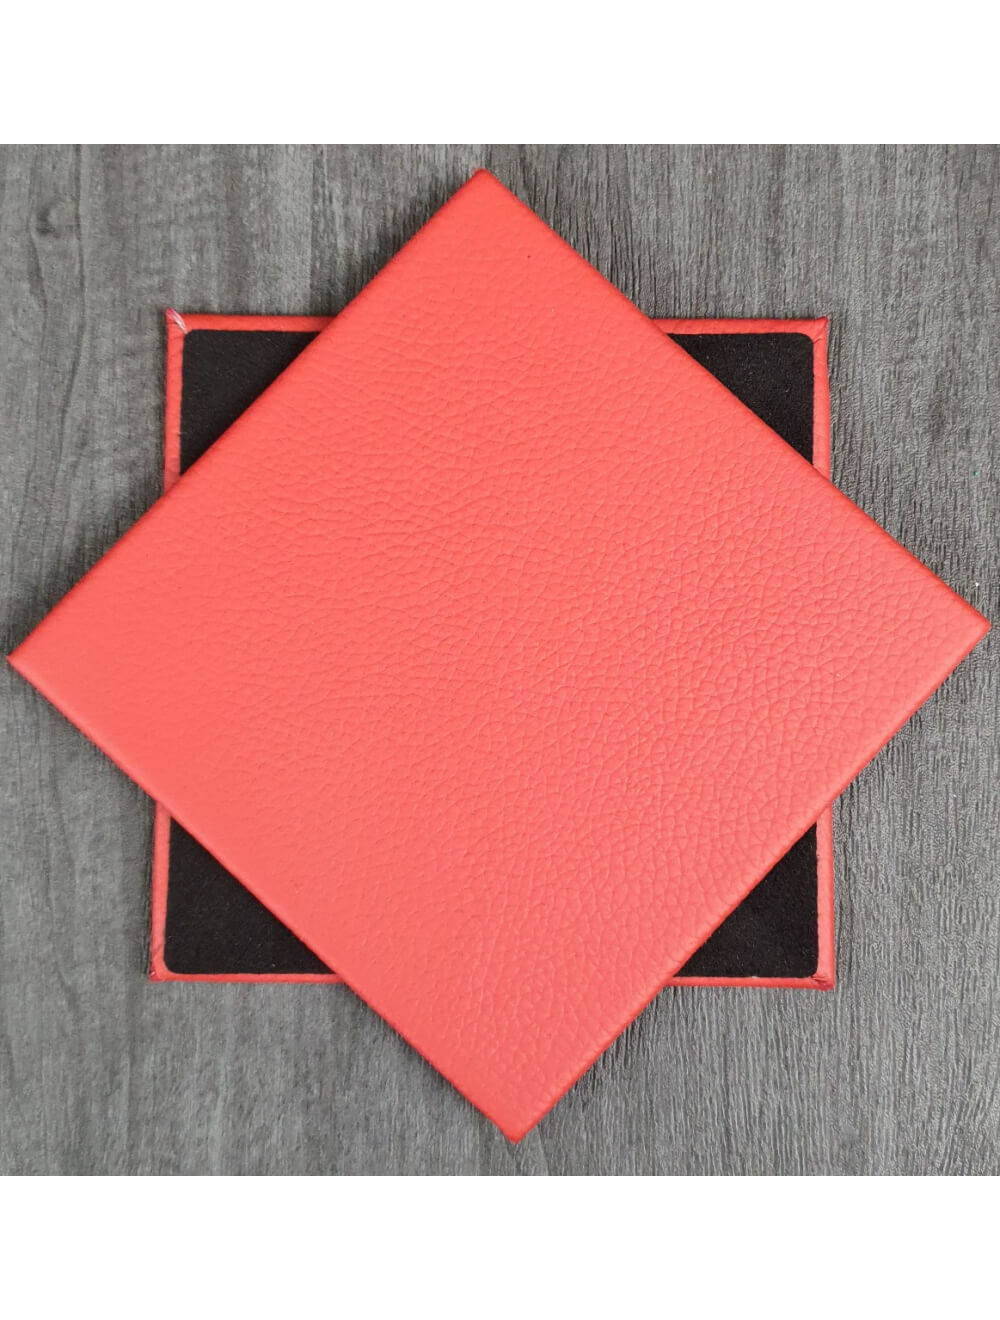 Poppy Shelly Leather Coaster- 10cm Sq (sale item)